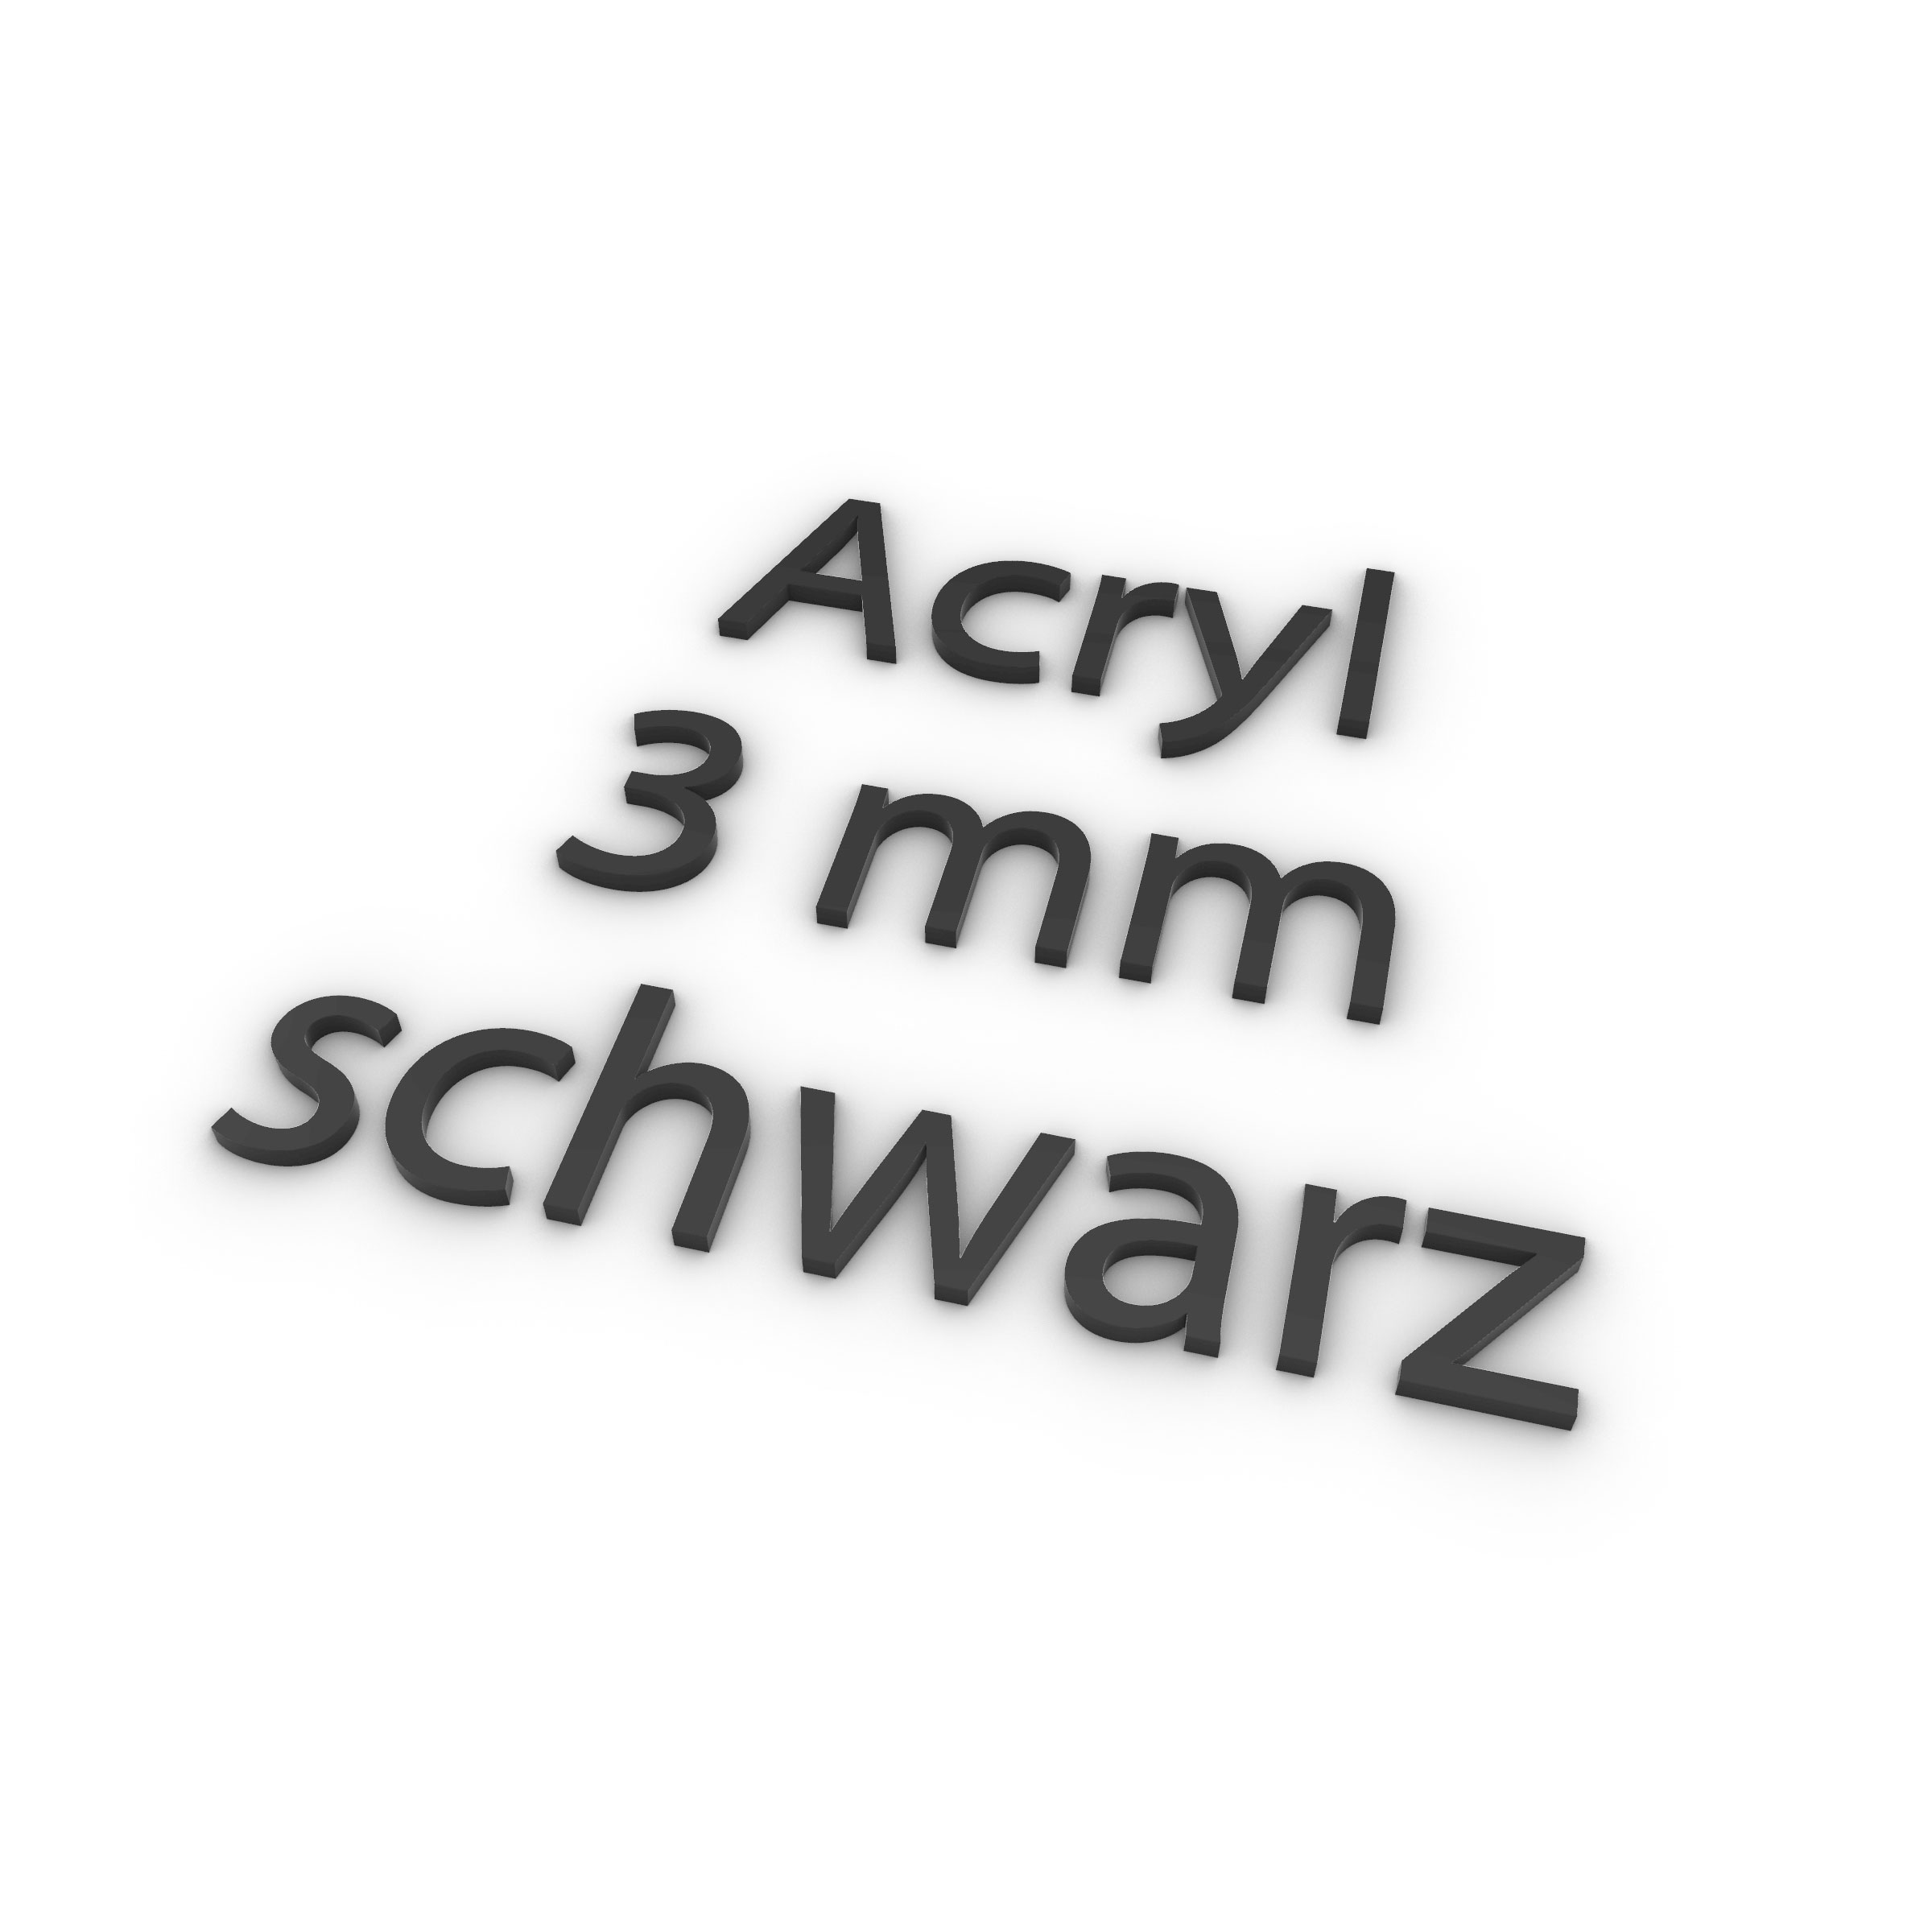 https://werbetechnik-onlineshop.de/images/product_images/original_images/Acryl-3-mm-schwarz.jpg